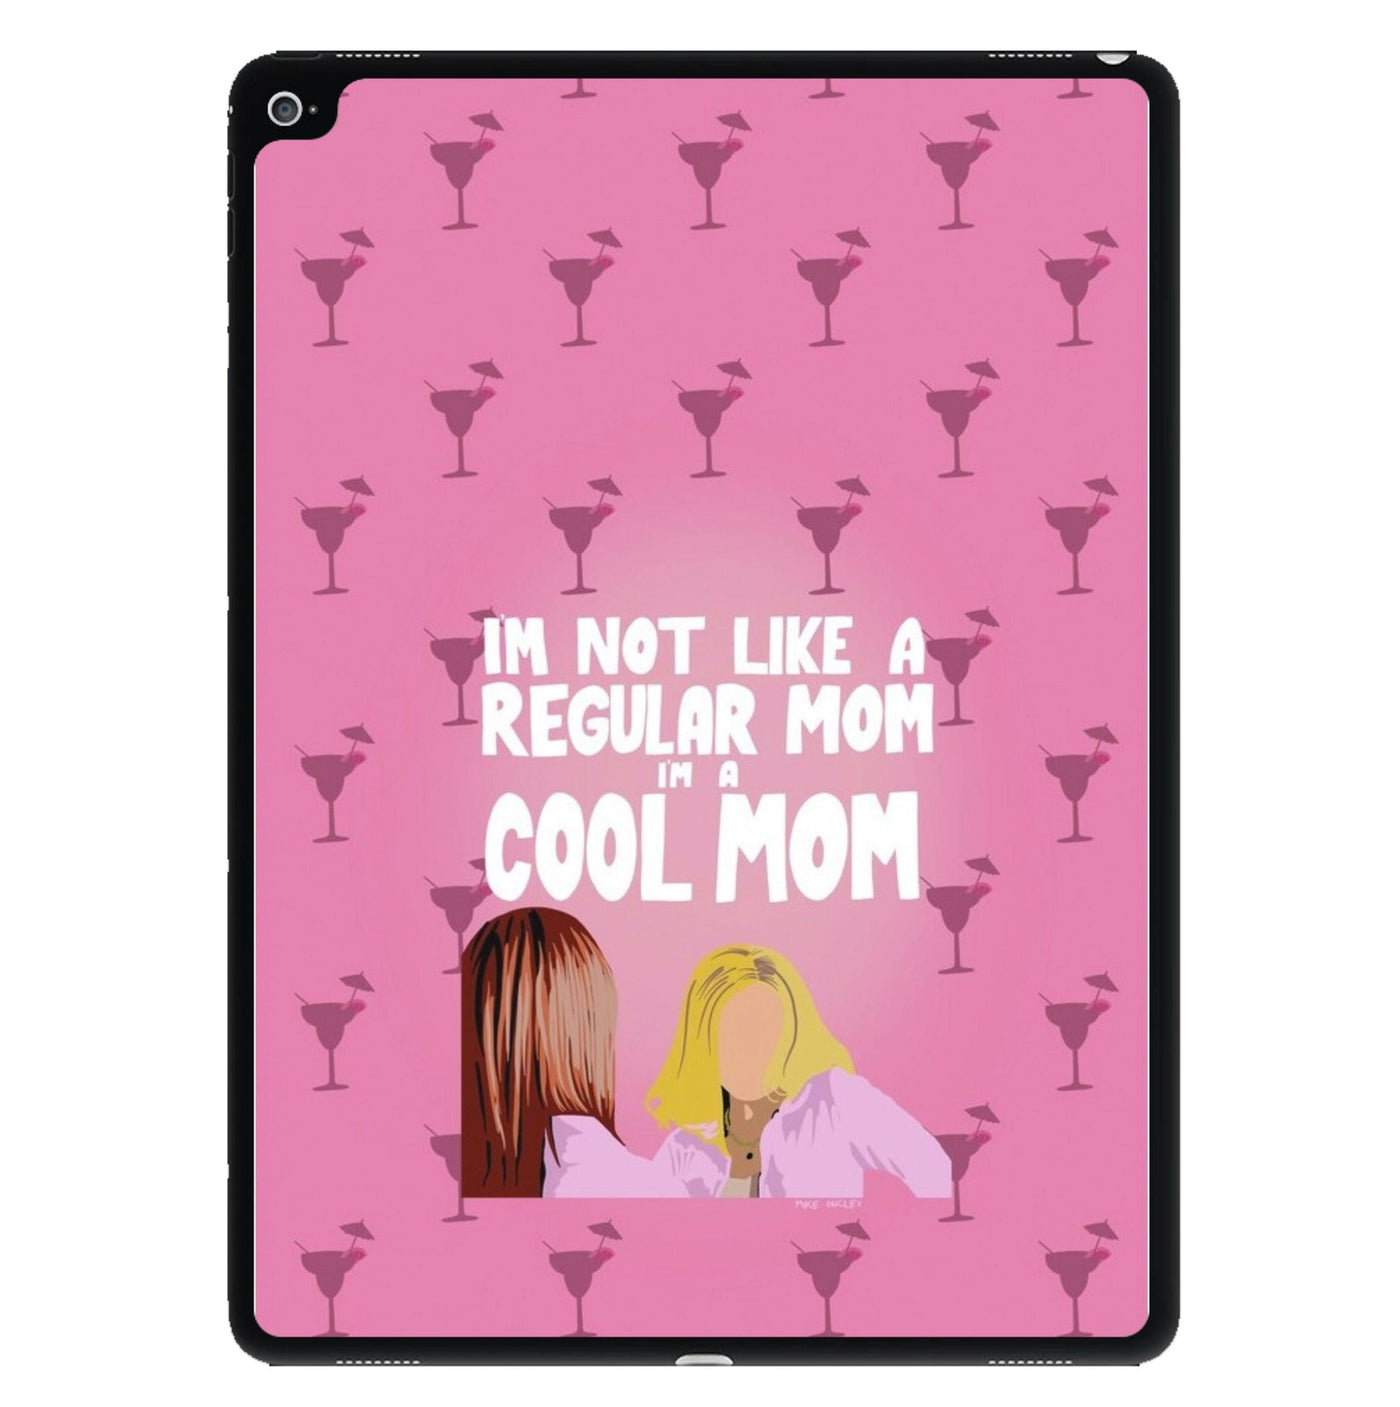 I'm A Cool Mom - Mean Girls iPad Case